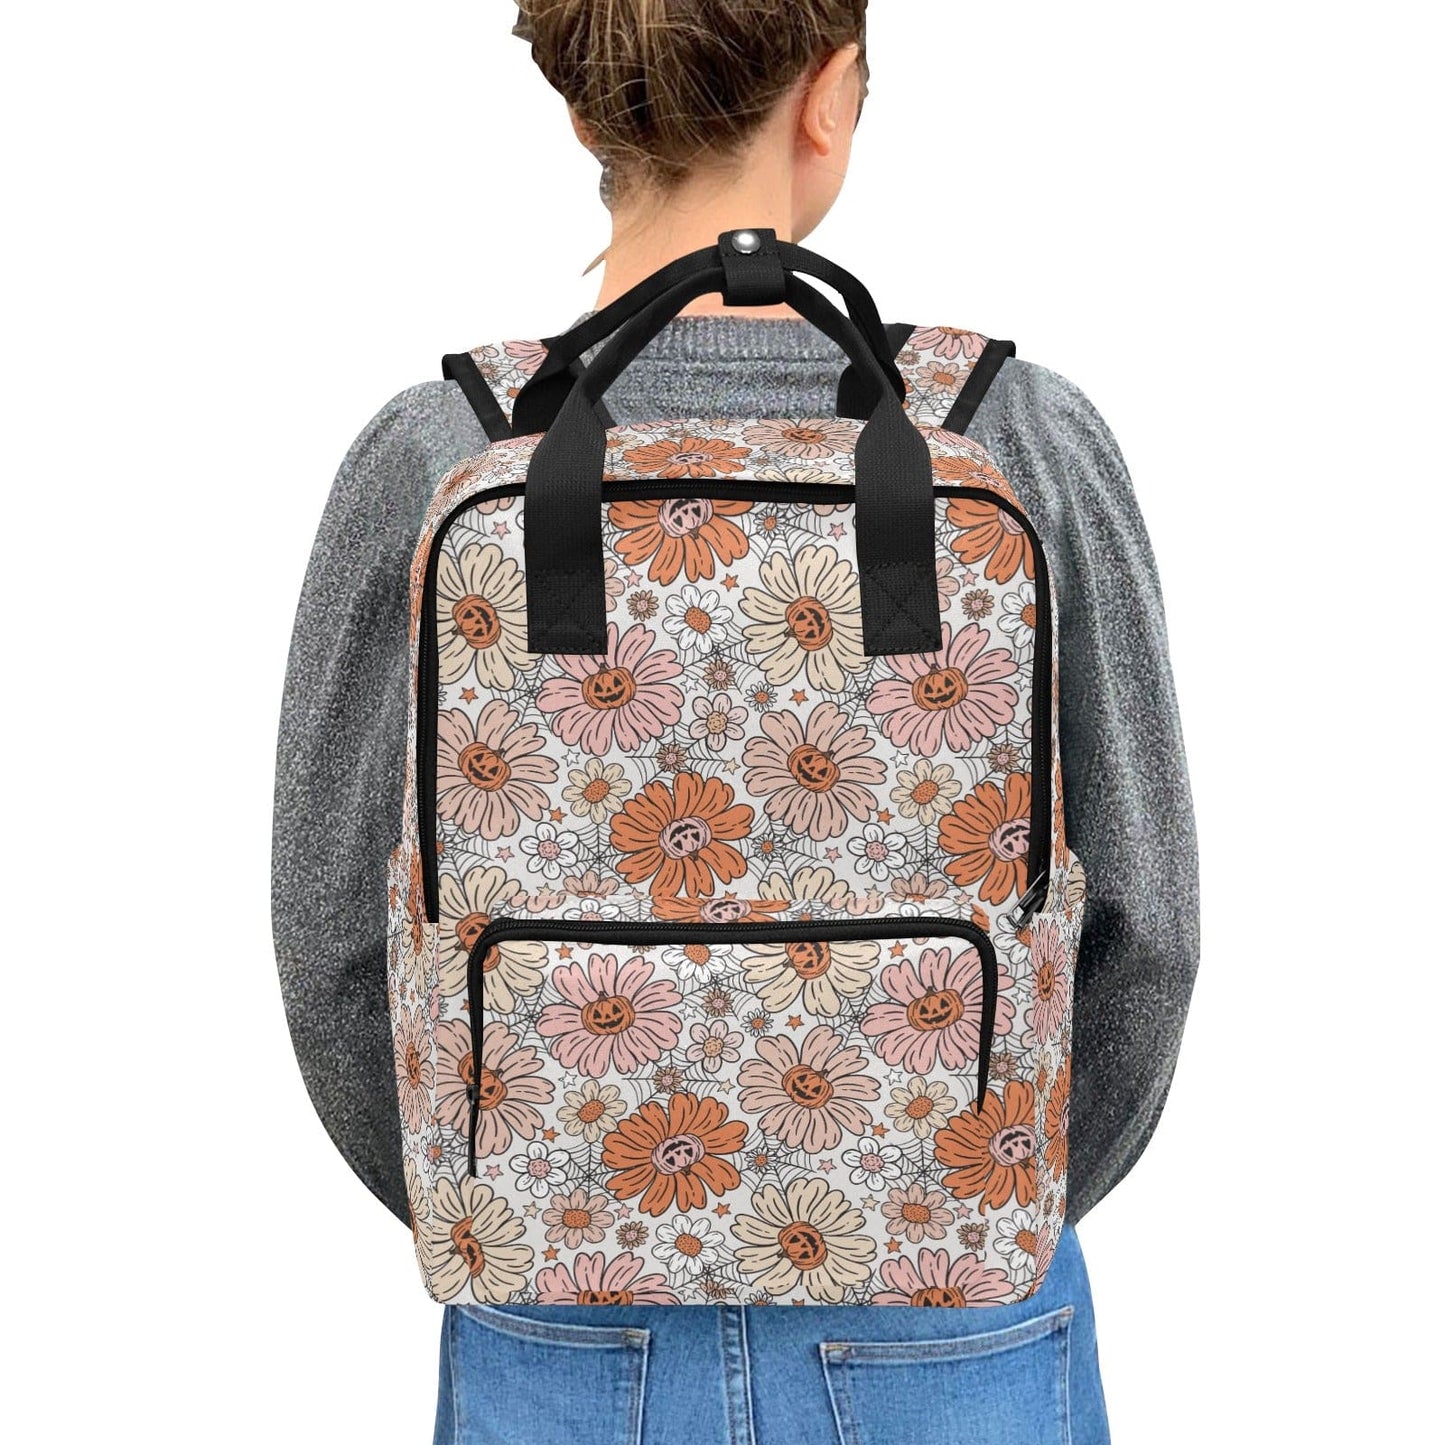 Jack O'Lantern Daisy Double Handle Backpack